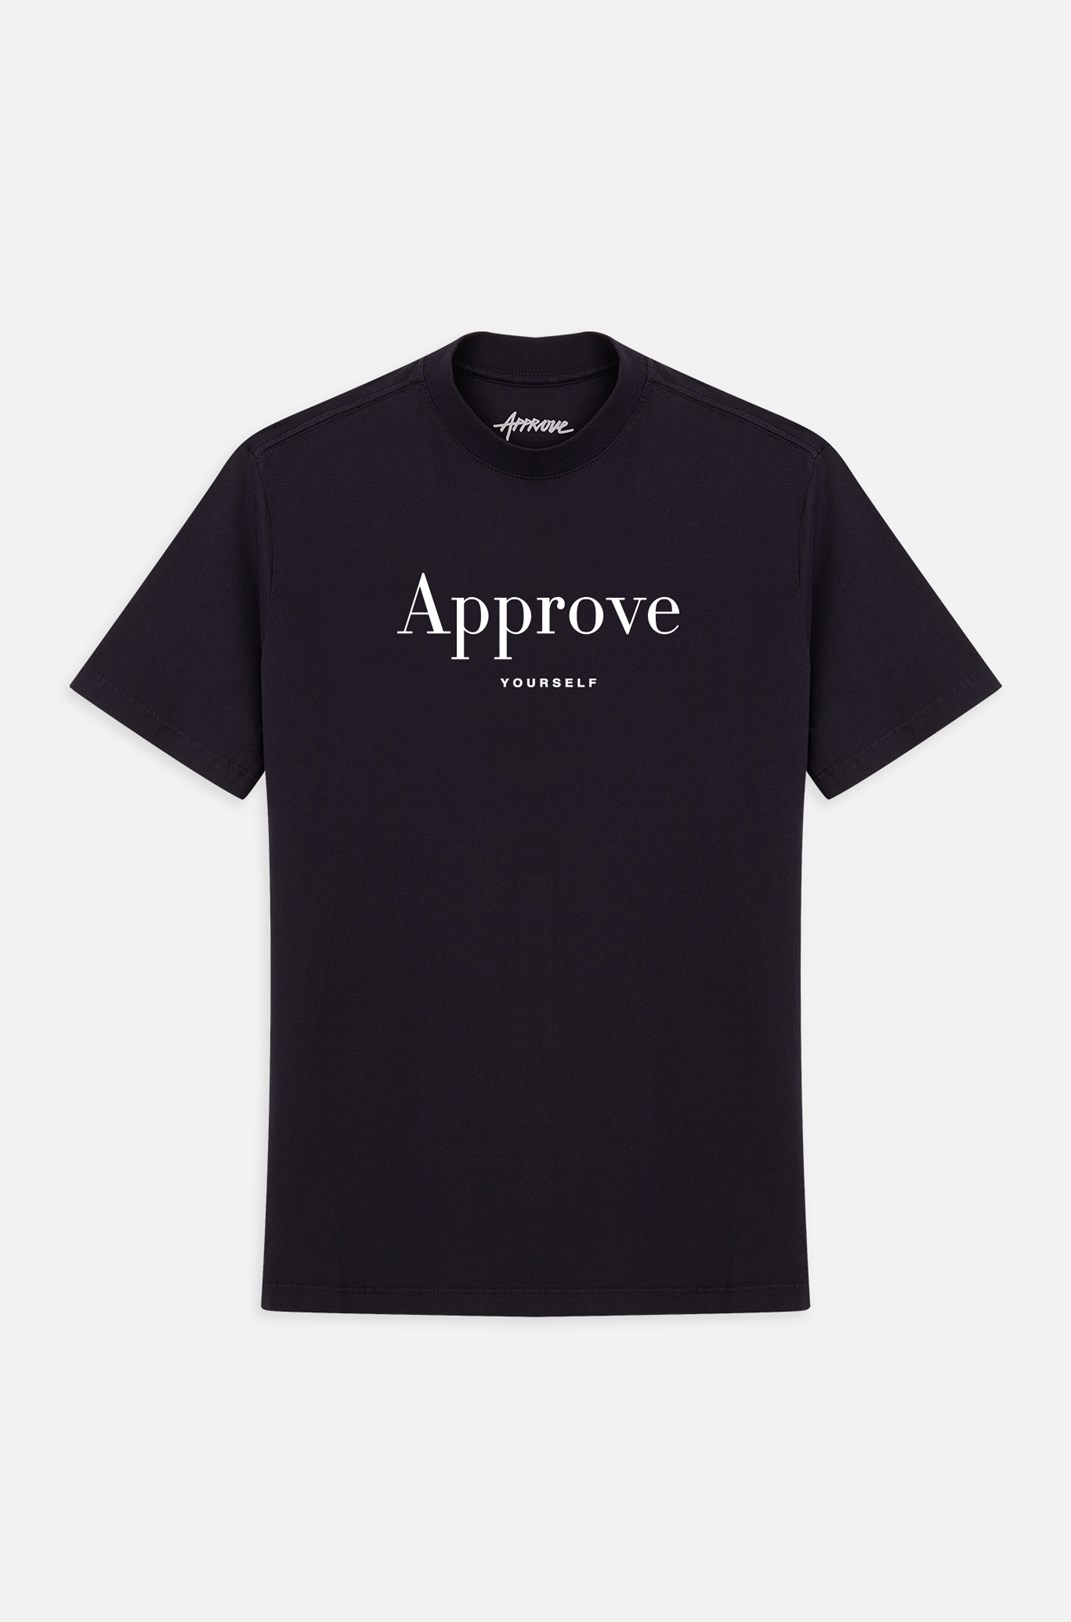 Camiseta Bold Approve Chromatic Preta E Branca